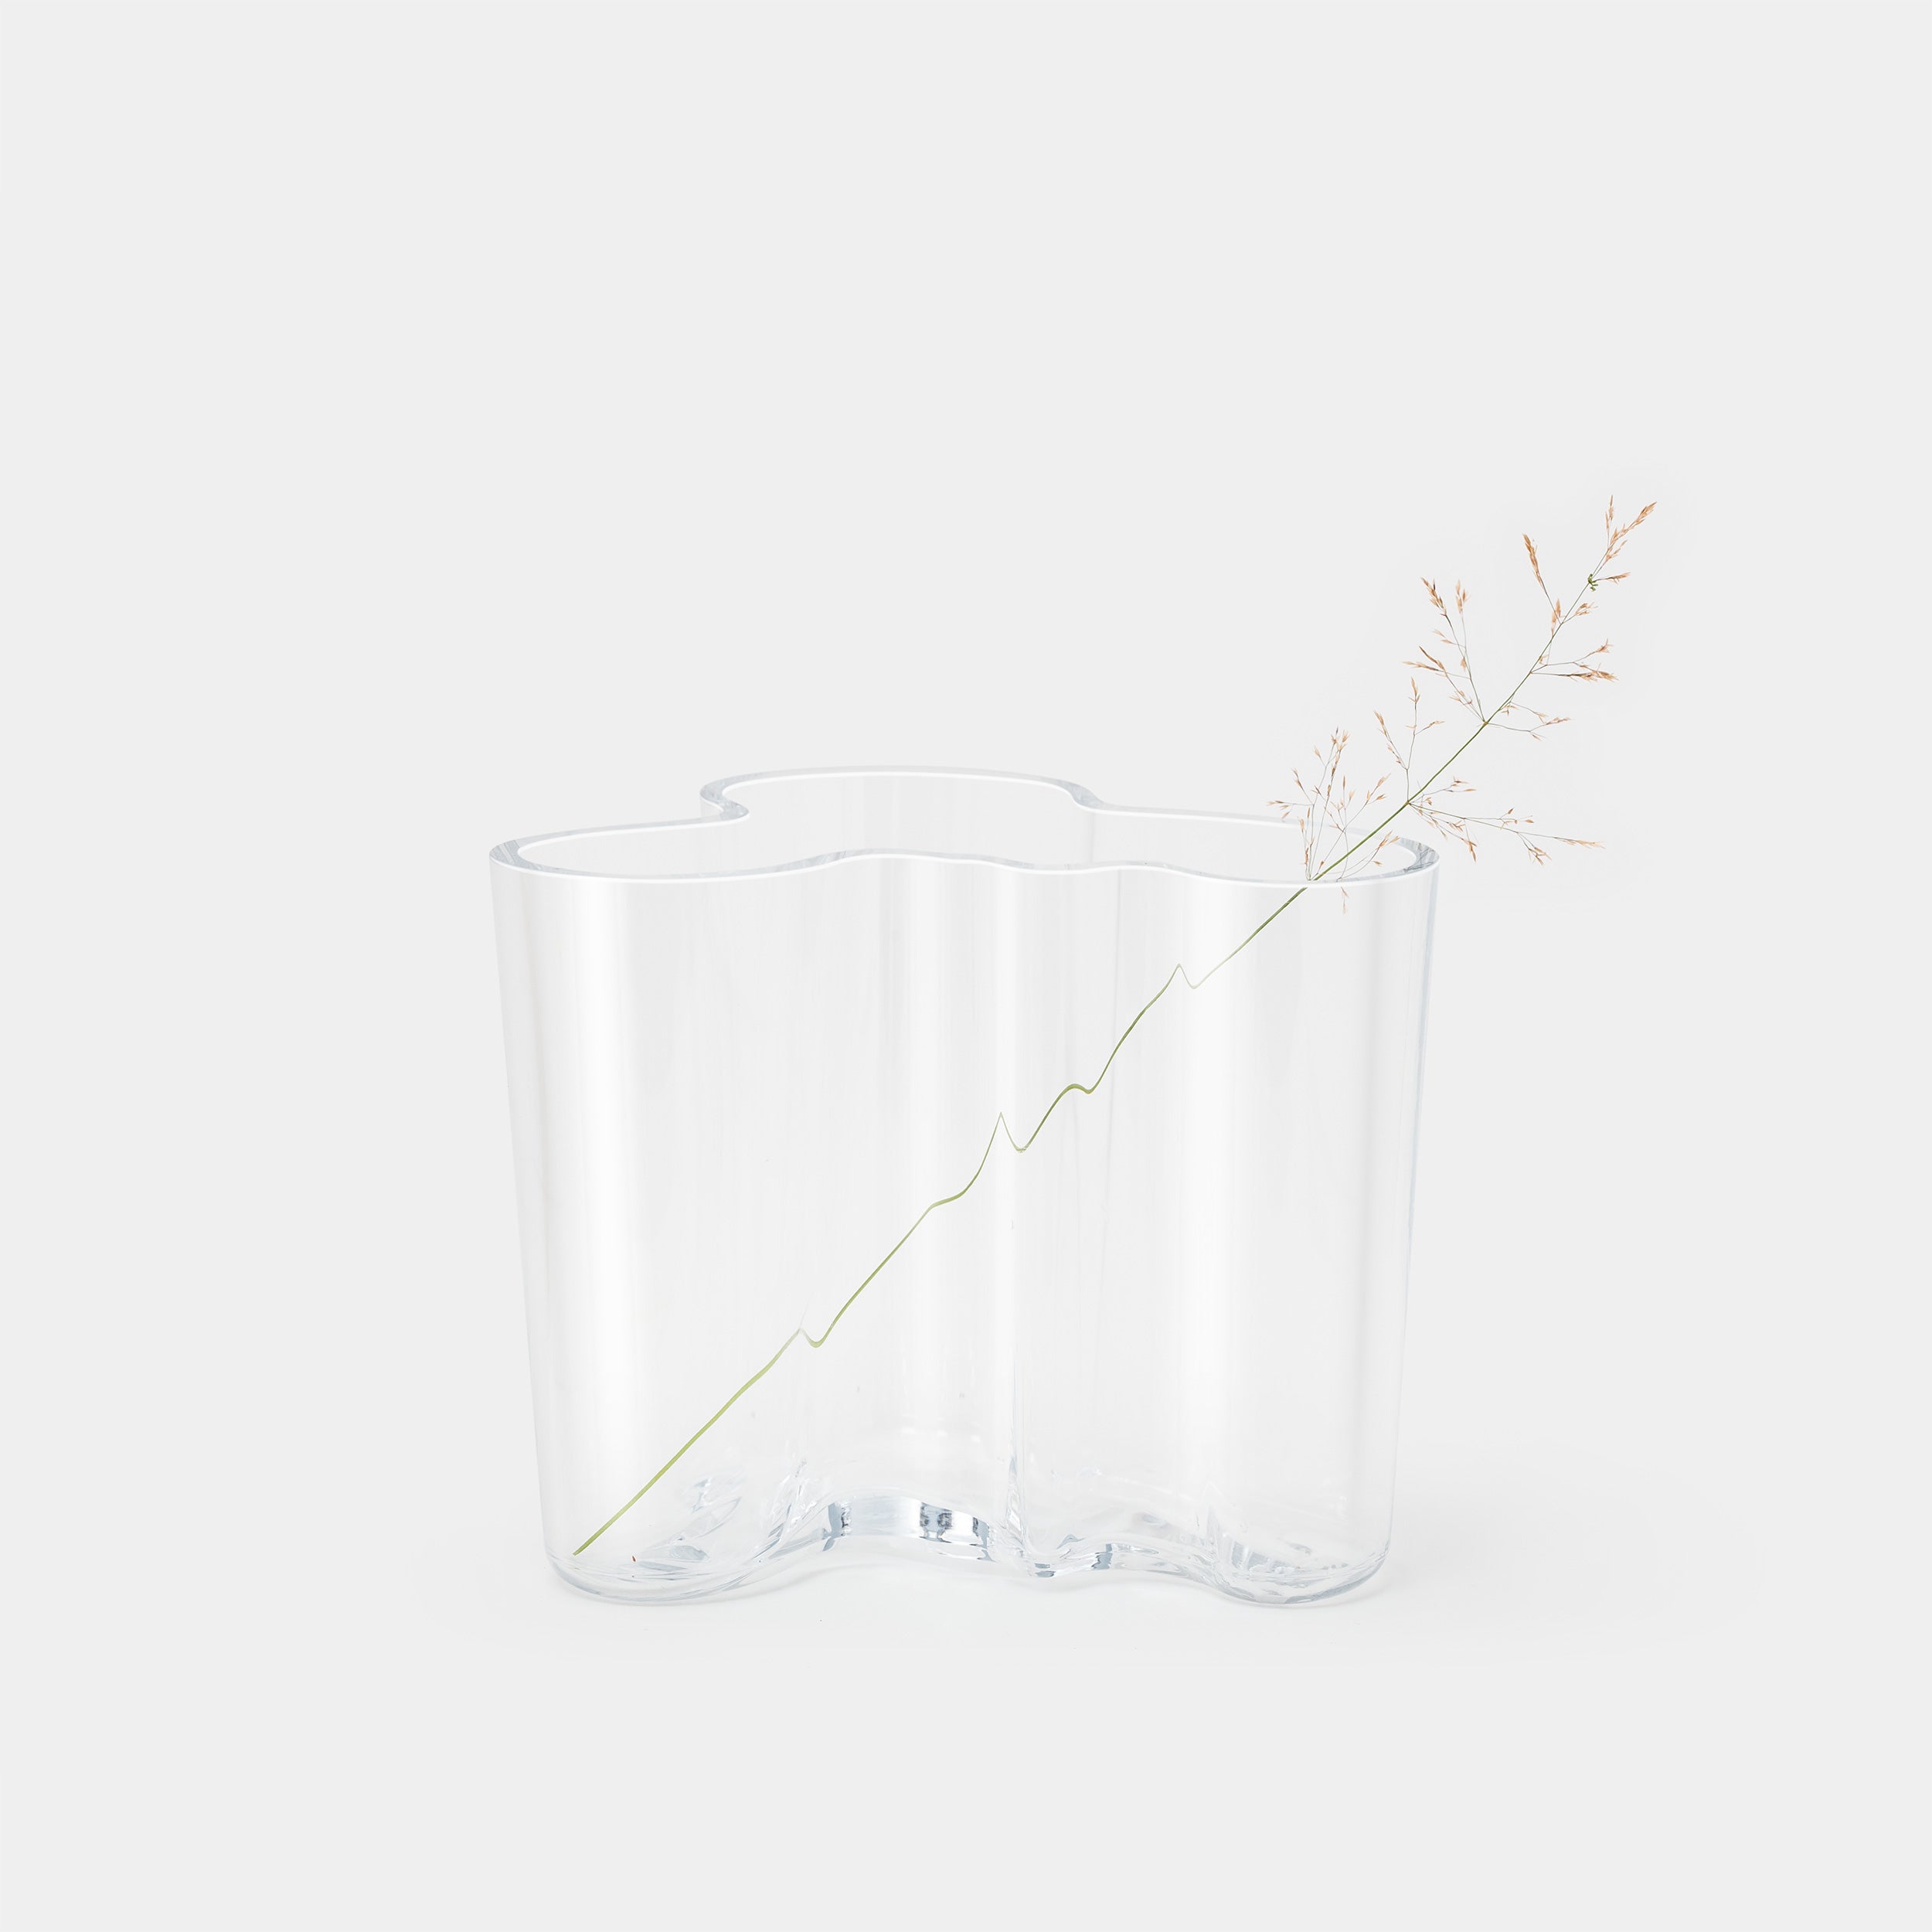 Aalto Vase with wild grass